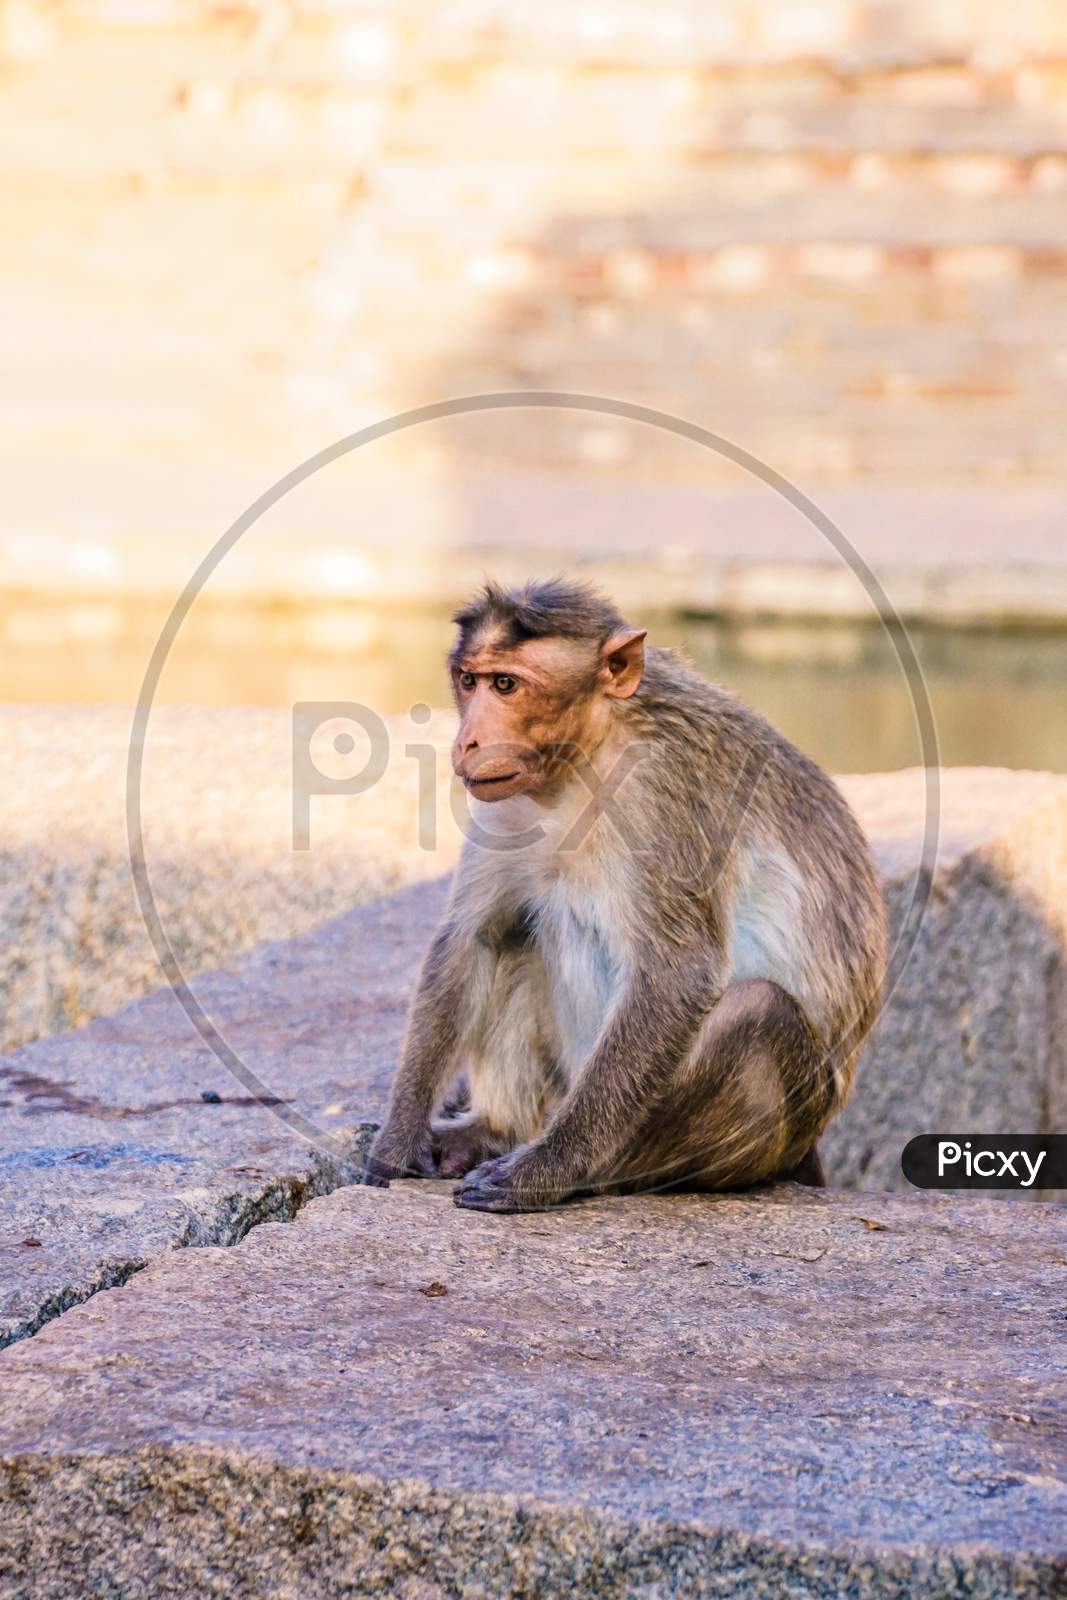 A Monkey sitting